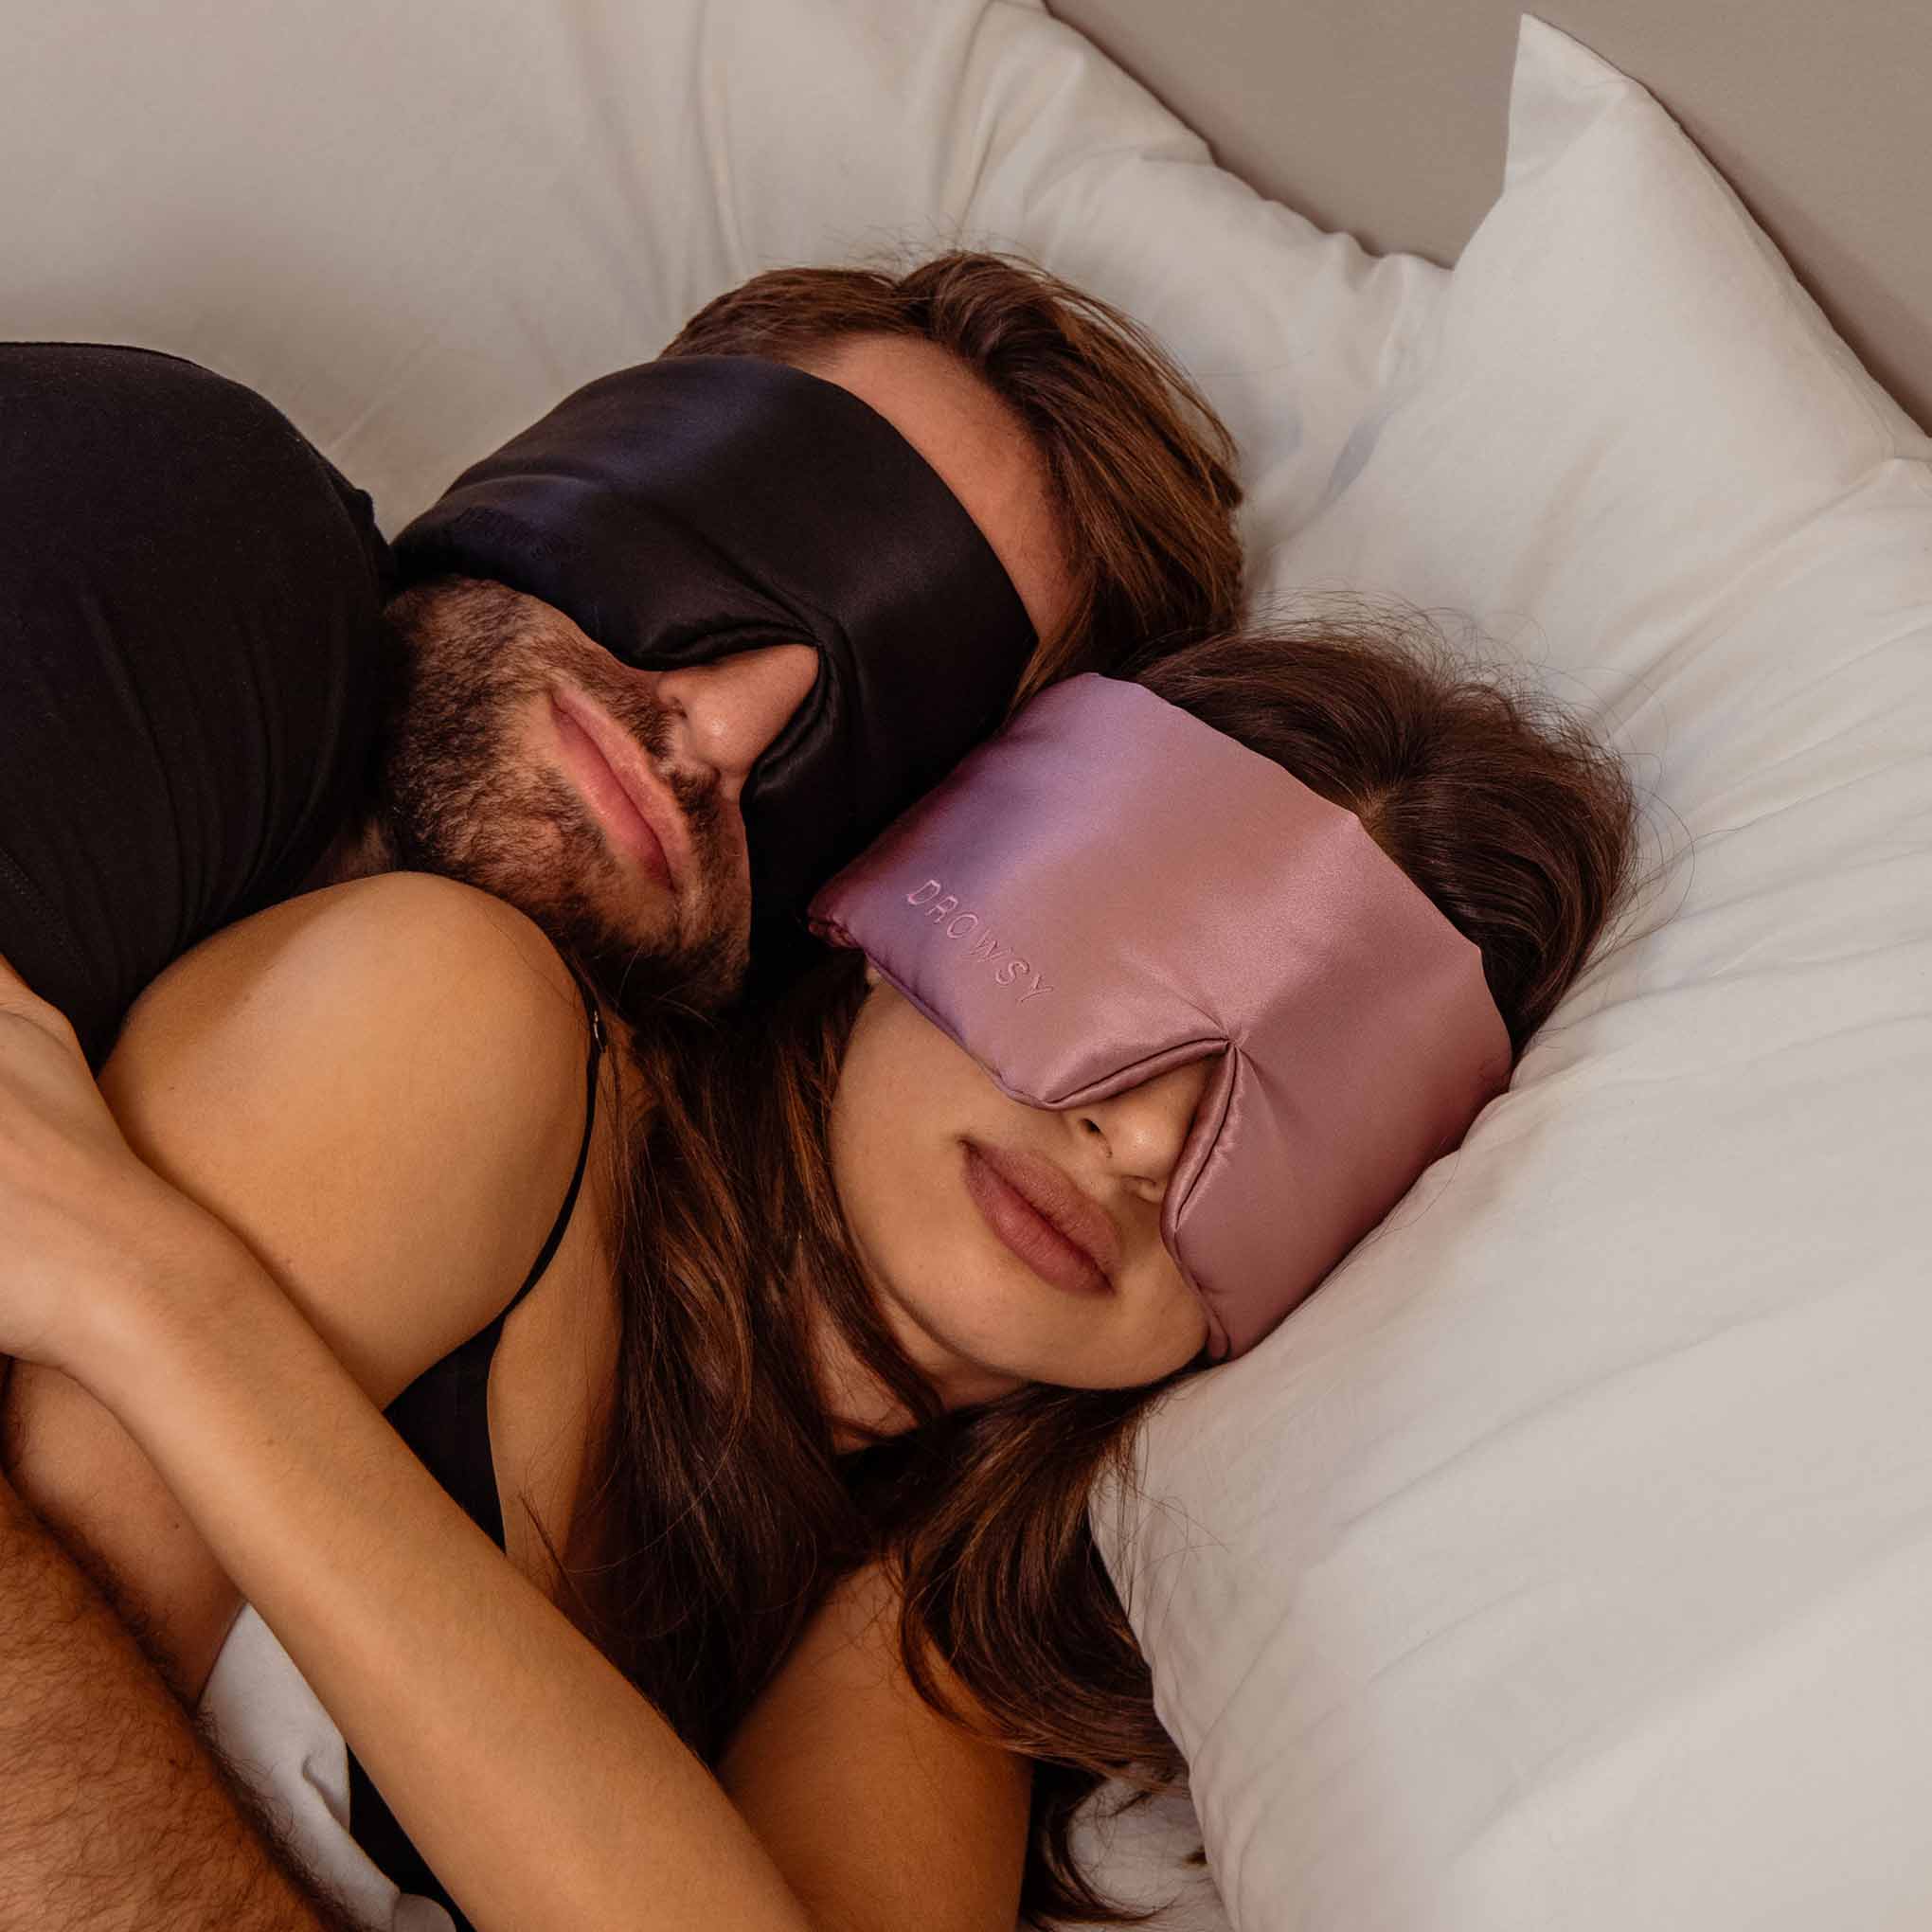 Drowsy silk sleep masks bundle offer best price selection of silk eye masks